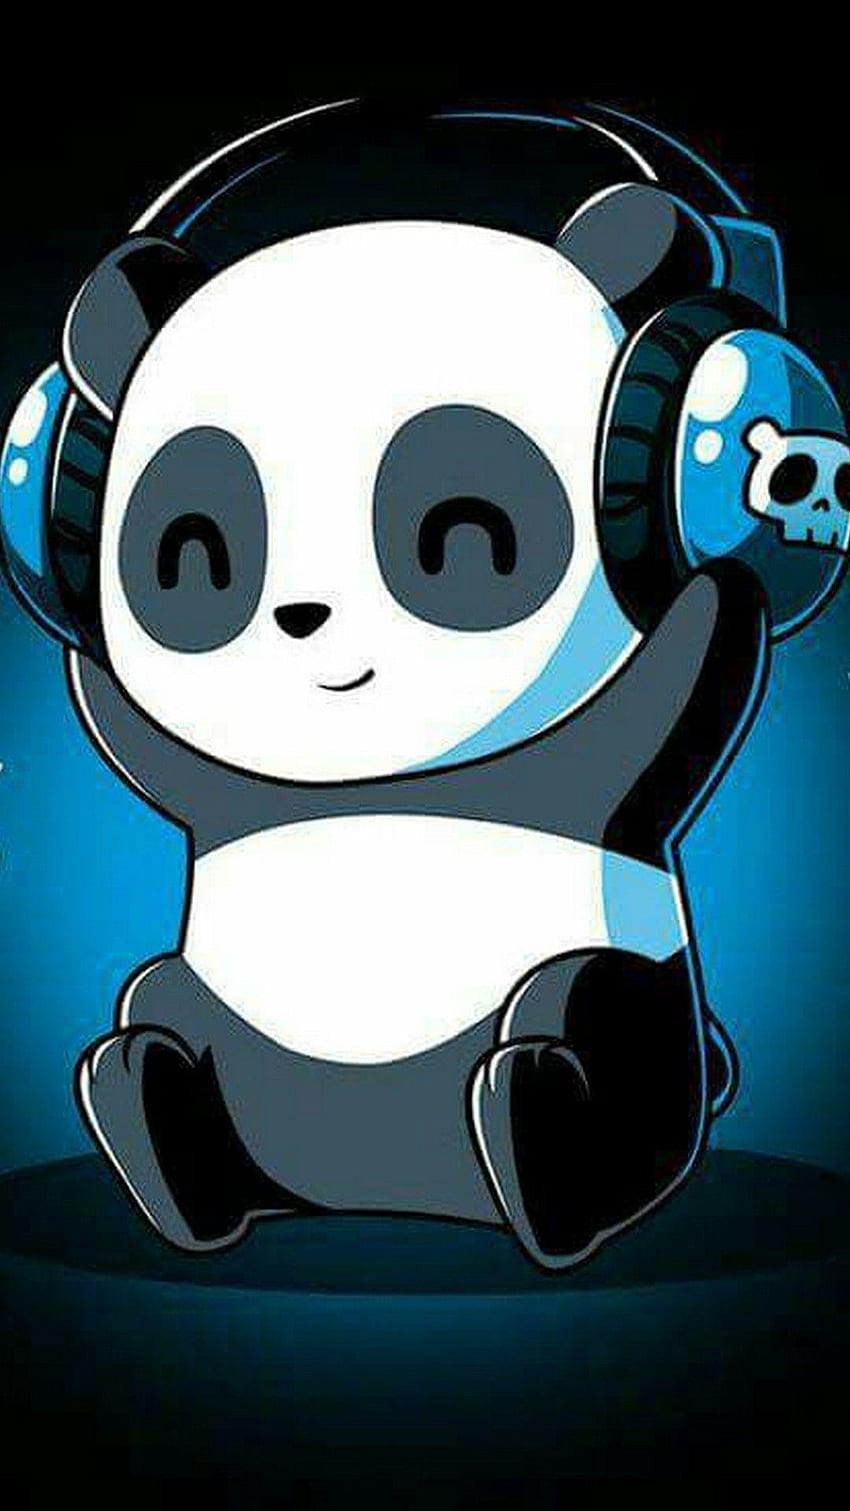 Panda genial, panda de dibujos animados genial fondo de pantalla del teléfono